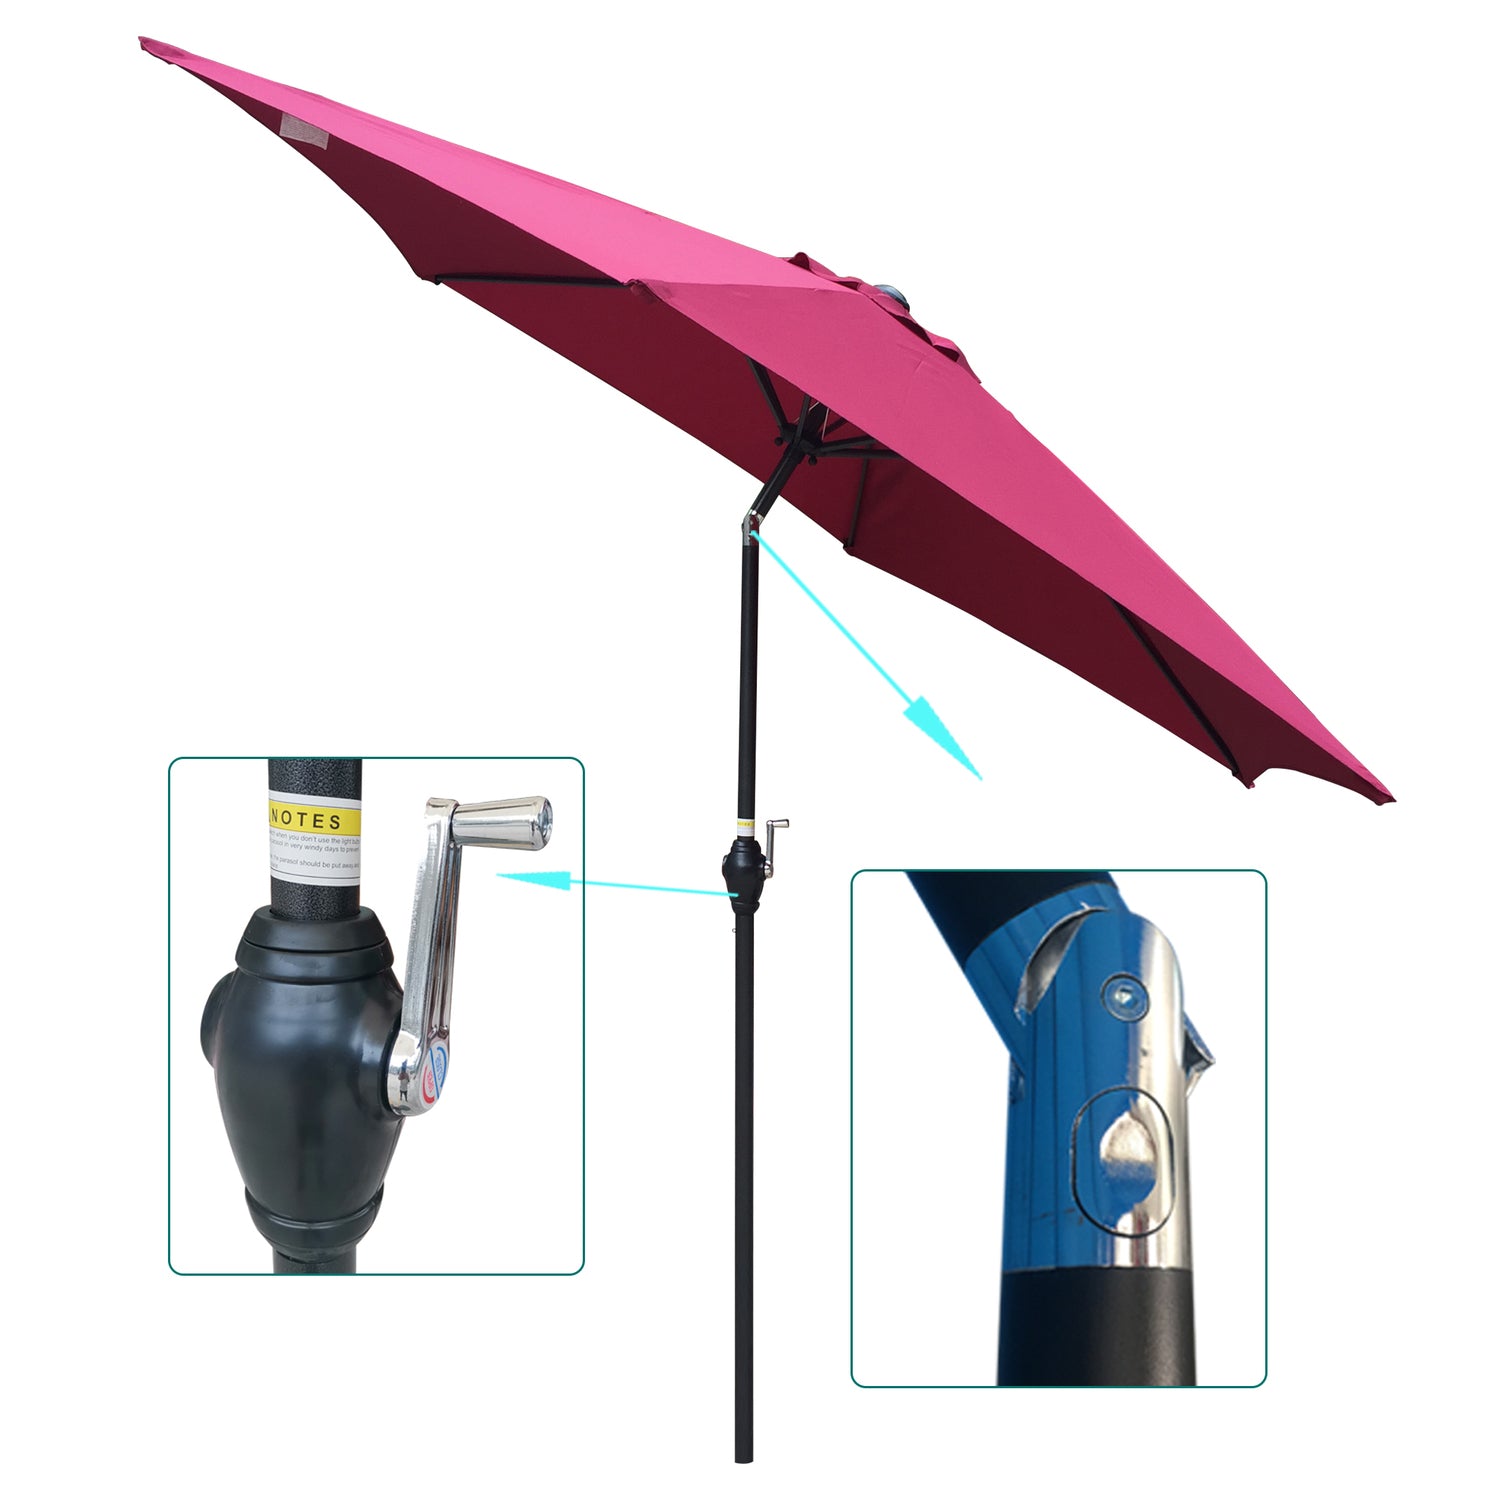 SUGIFT 9FT Patio Umbrella, Outdoor Umbrella with Push Button Tilt and Crank, Fade Resistant Water Proof Patio Table Umbrella,Burgundy